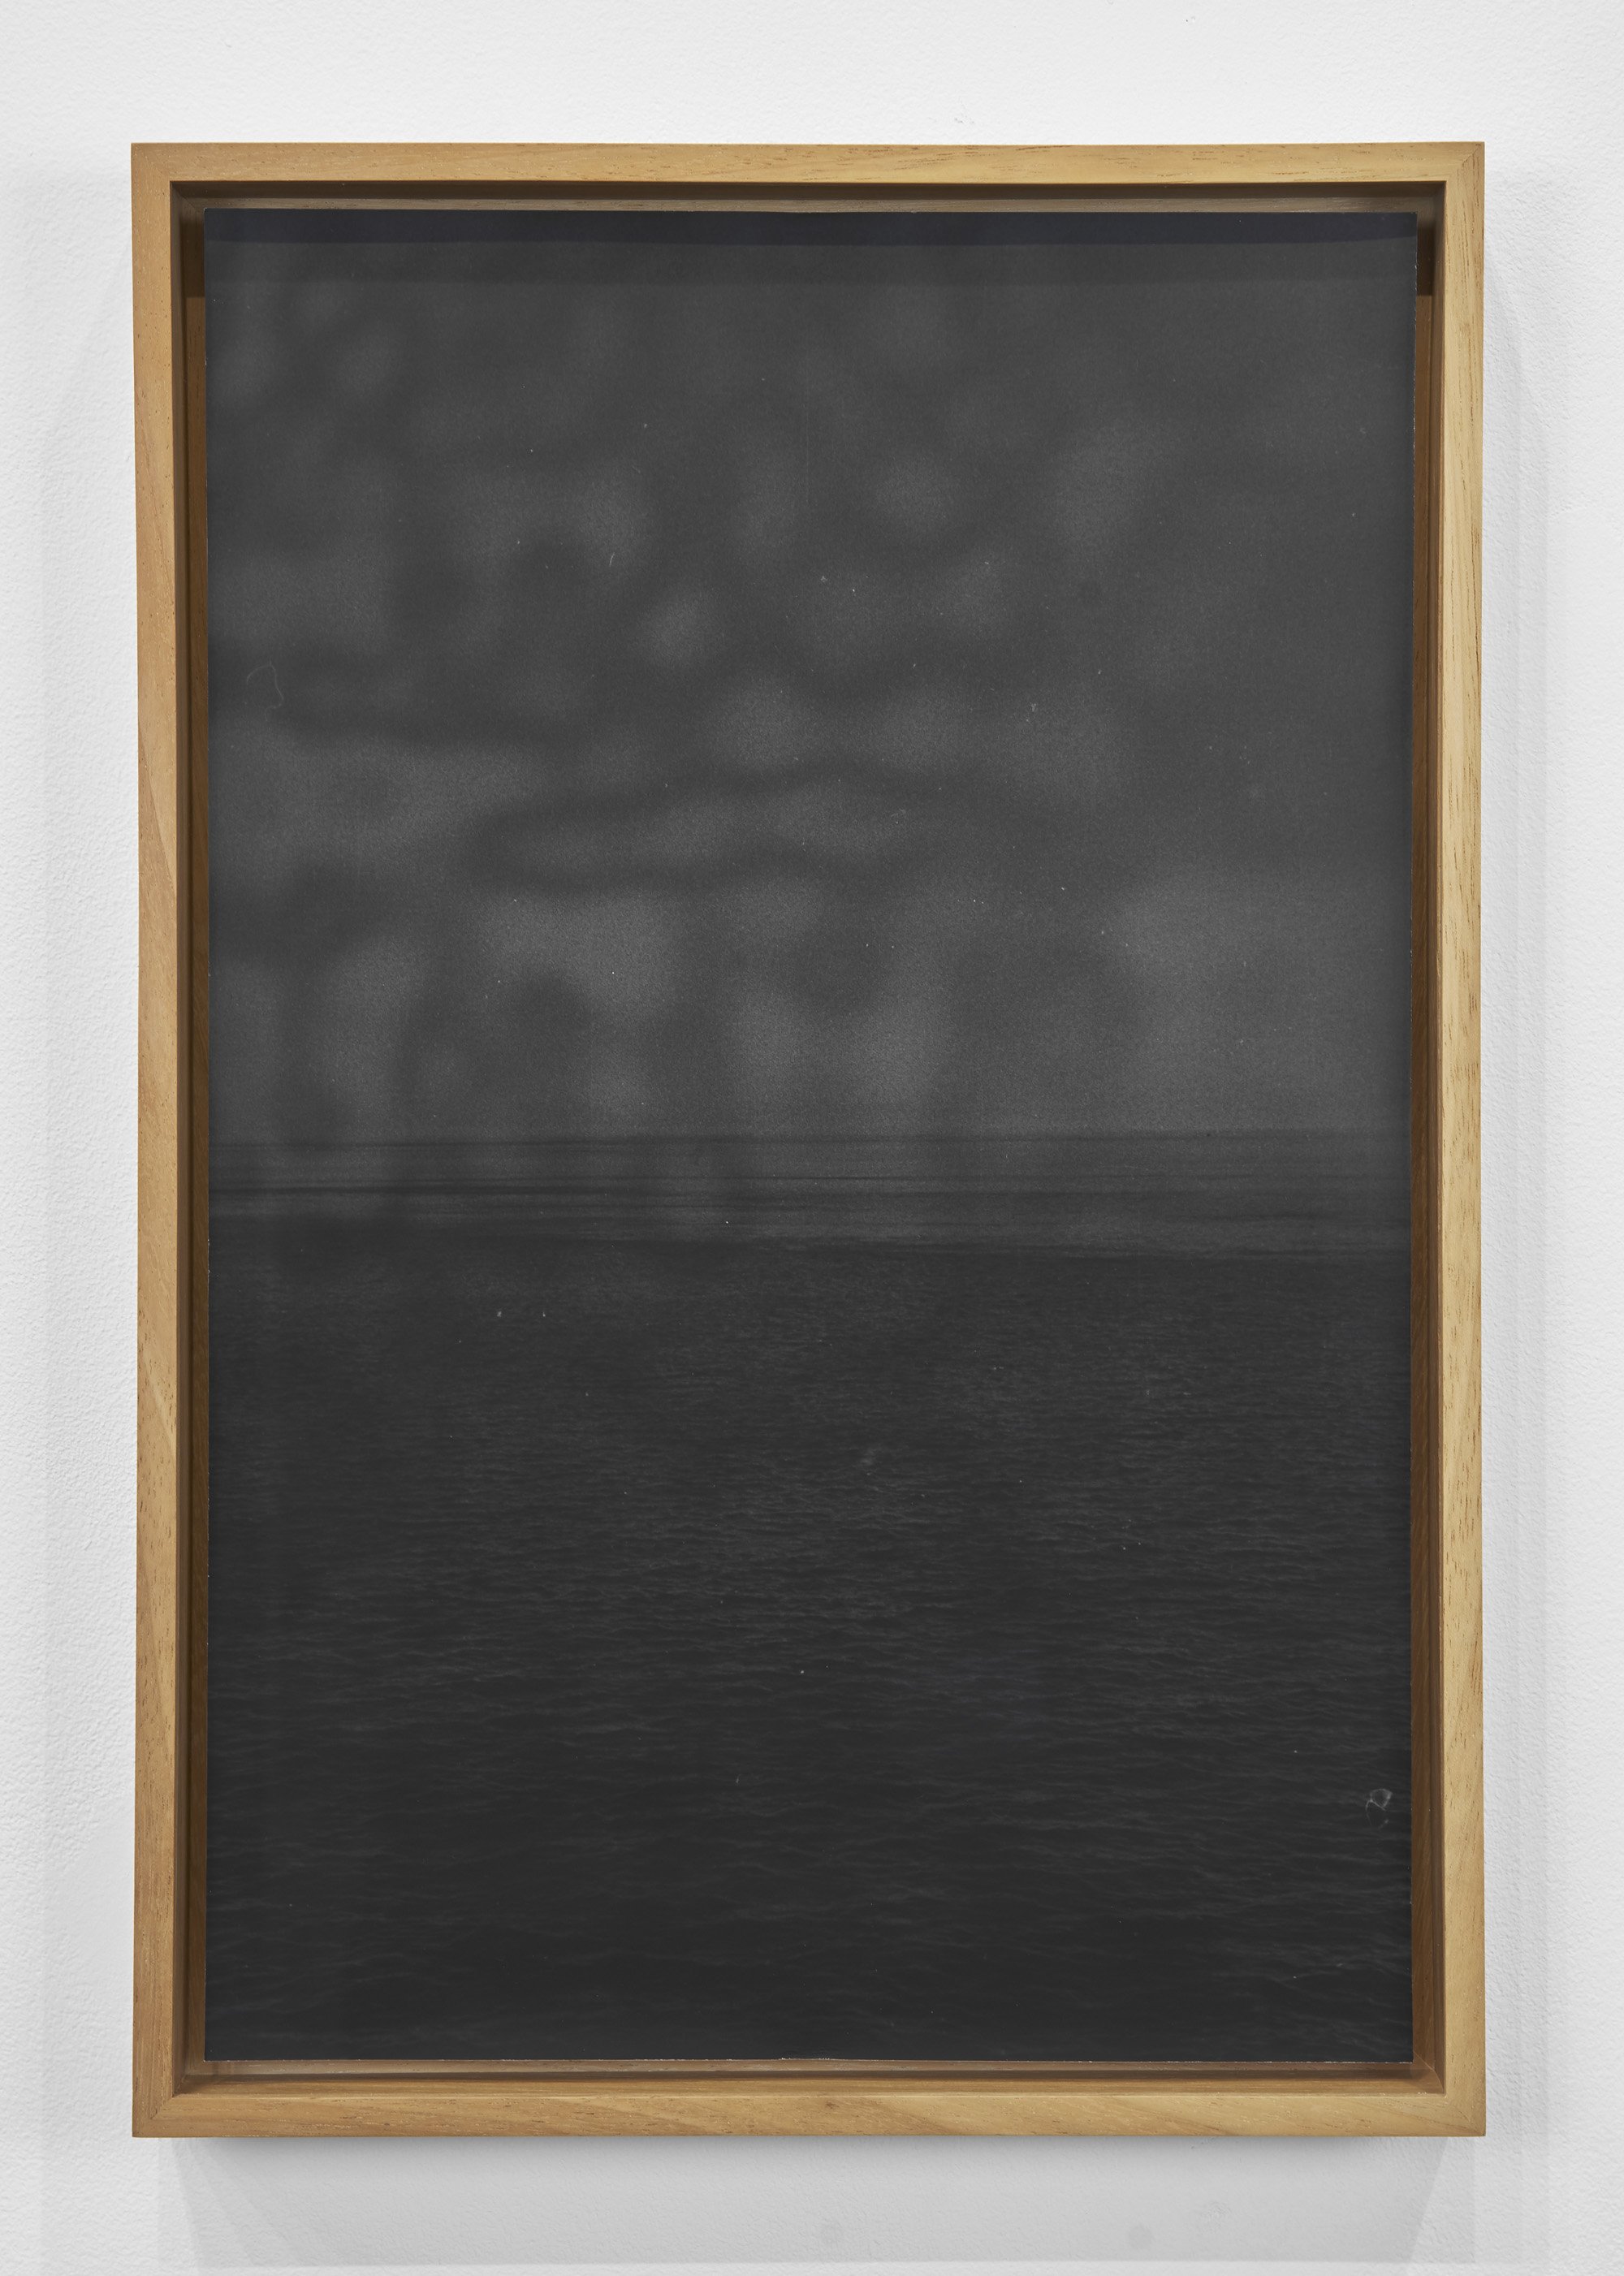  Ship Window (dark) 2017-21 2021 Unique fibre based silver gelatin print in iroko frame 42 x 29.5 cm  1/1 